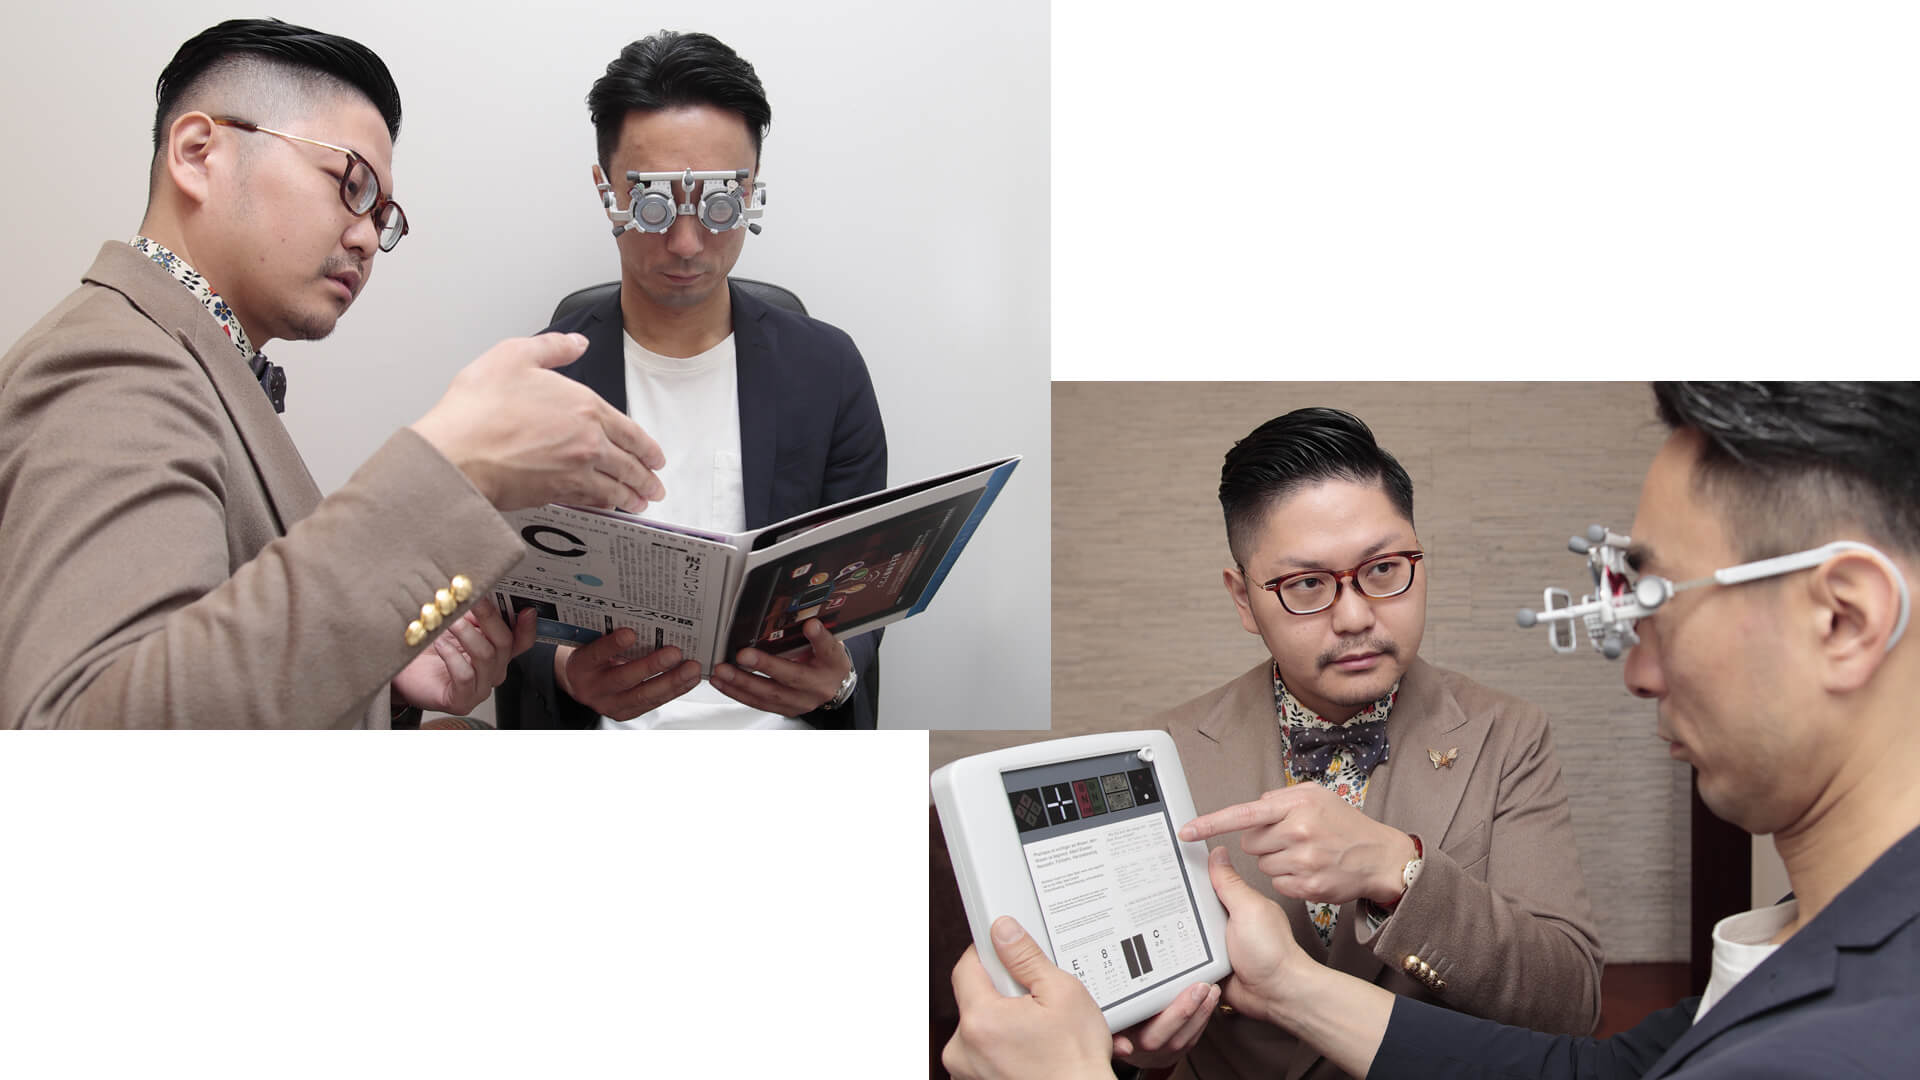 About Binocular vision function examination, Doitsu Meister Gankyouin